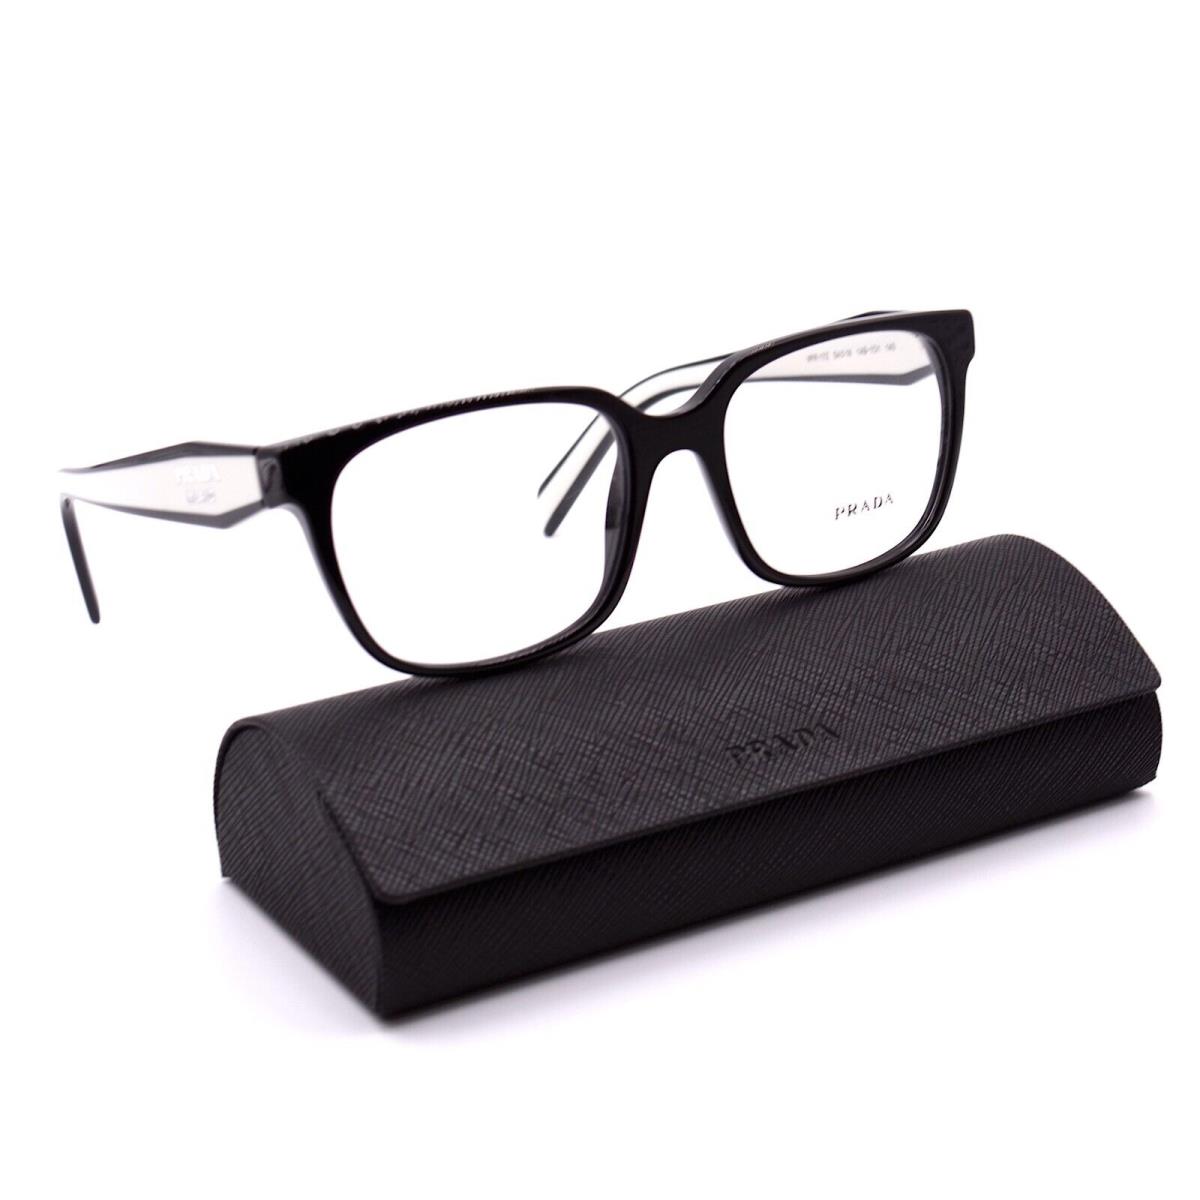 Prada eyeglasses  - Frame: Black 3